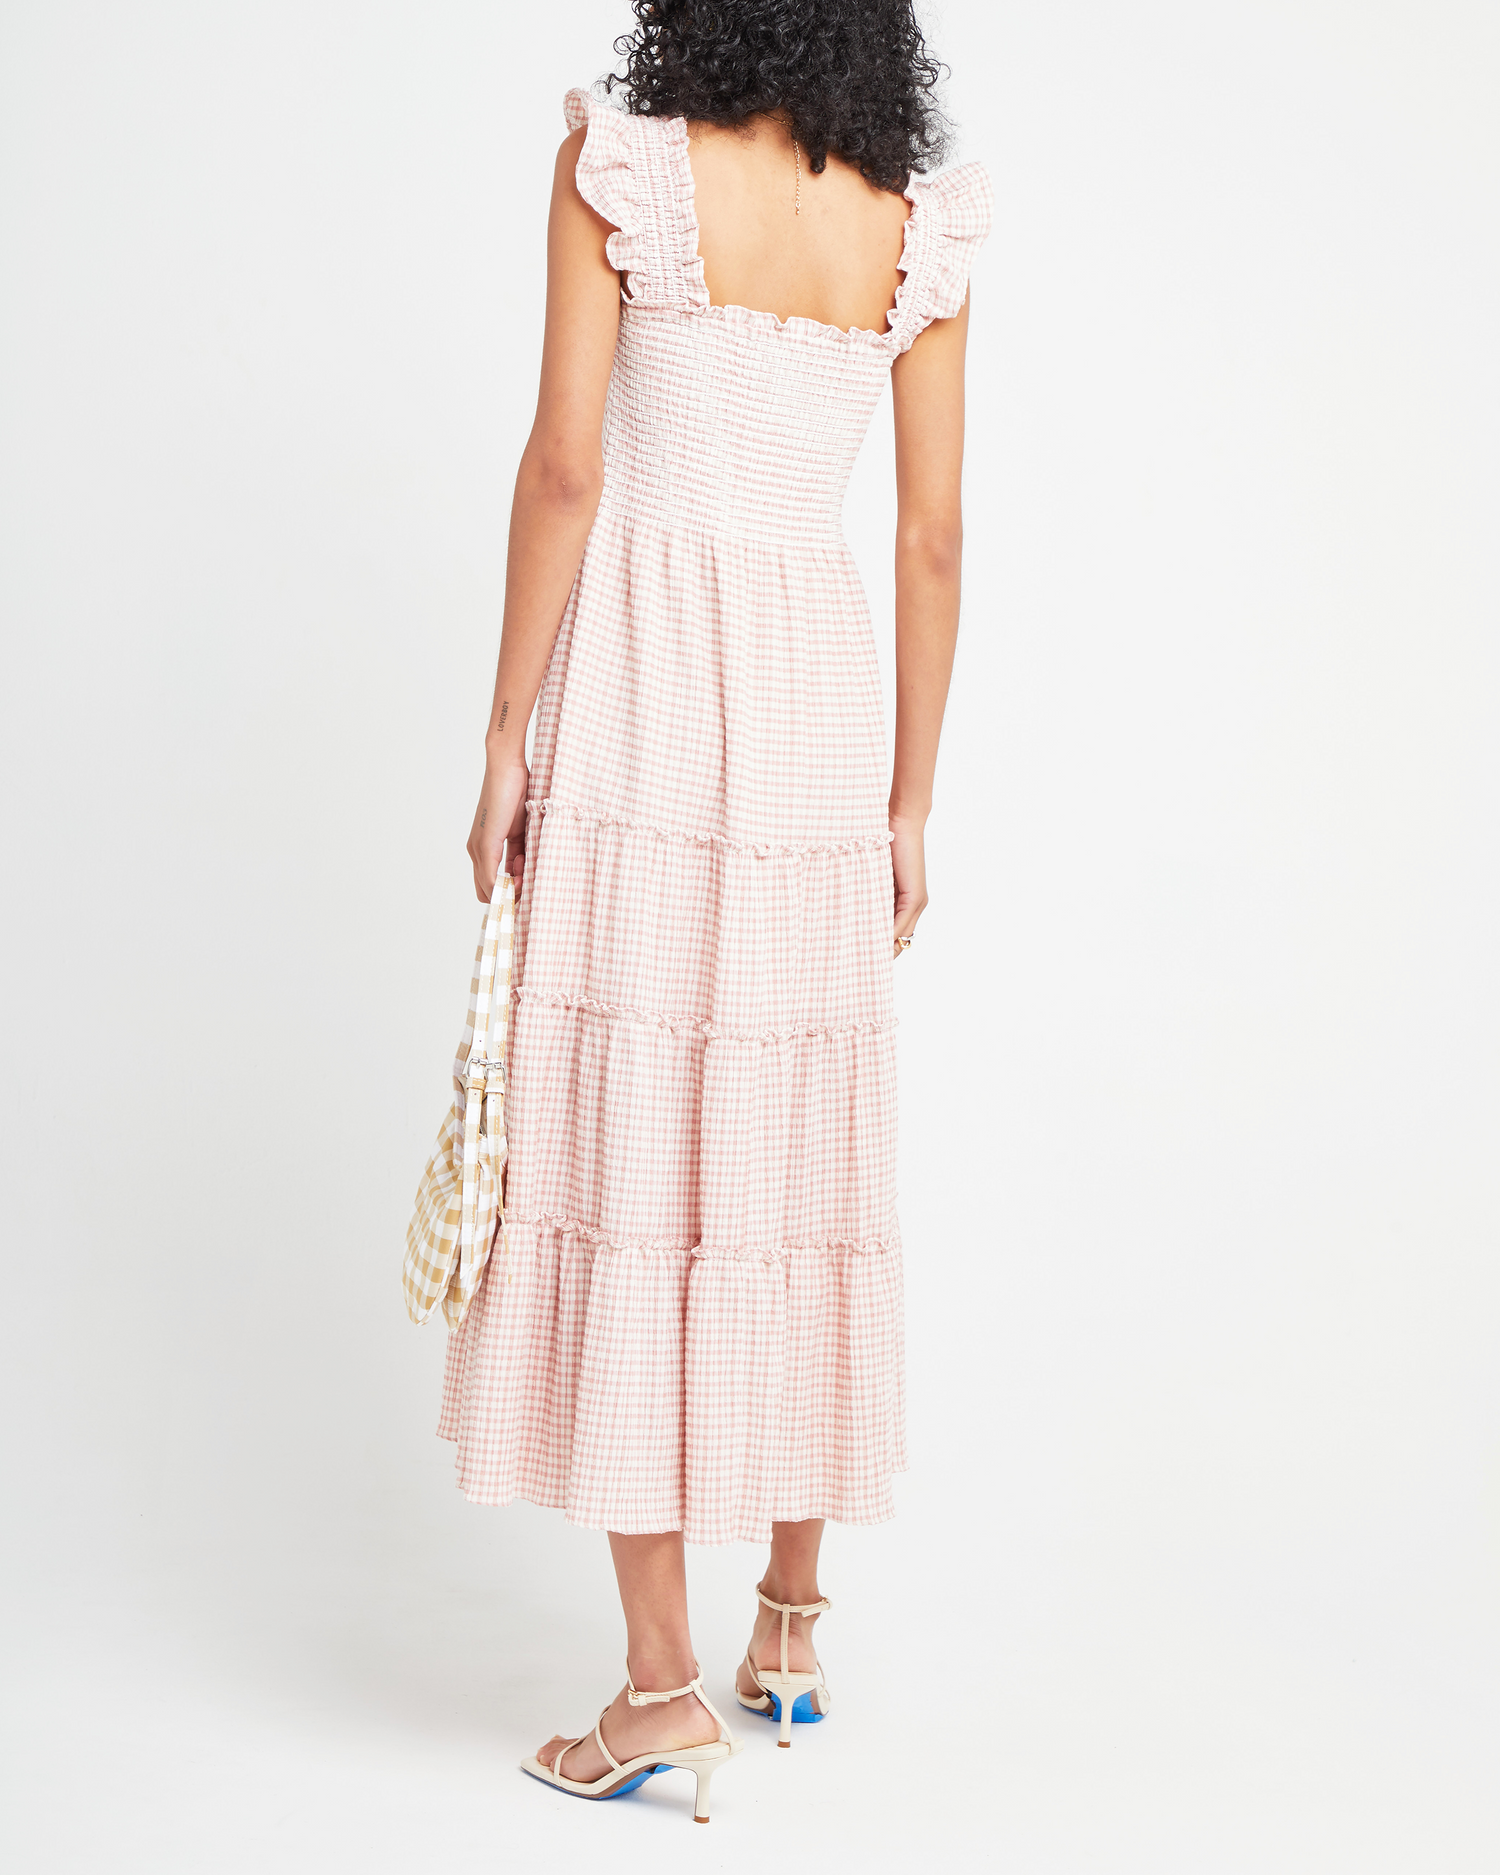 Second image of Calypso Maxi Dress, a pink maxi dress, ruffle cap sleeves, smocked bodice